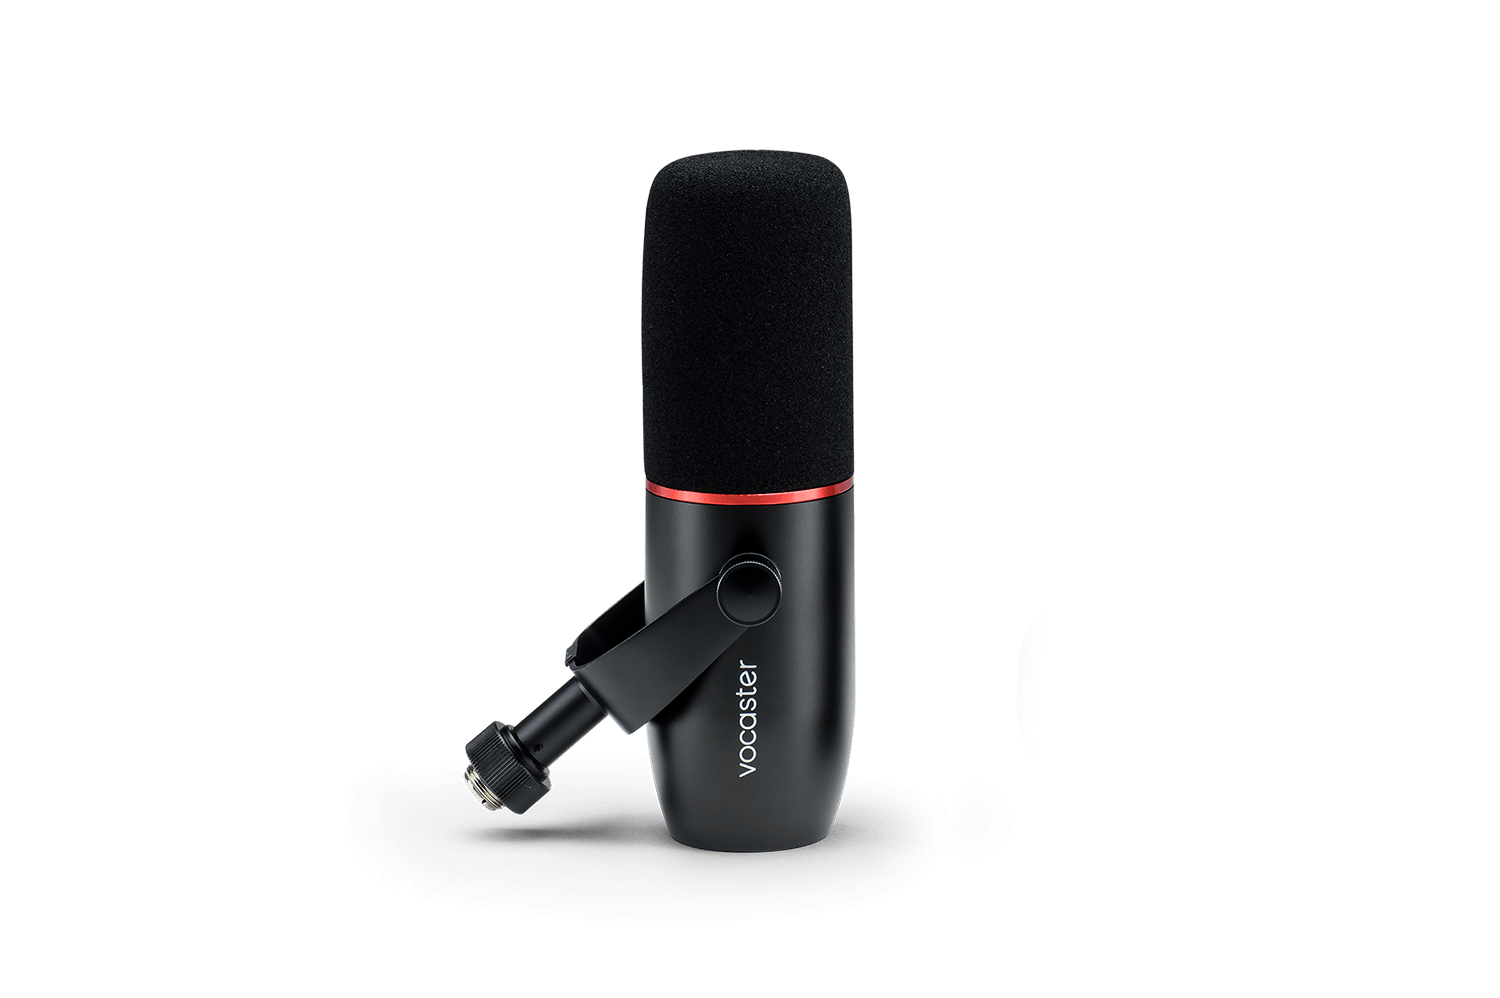 Focusrite Vocaster Two Studio | Podcasting Audio Interface Kit